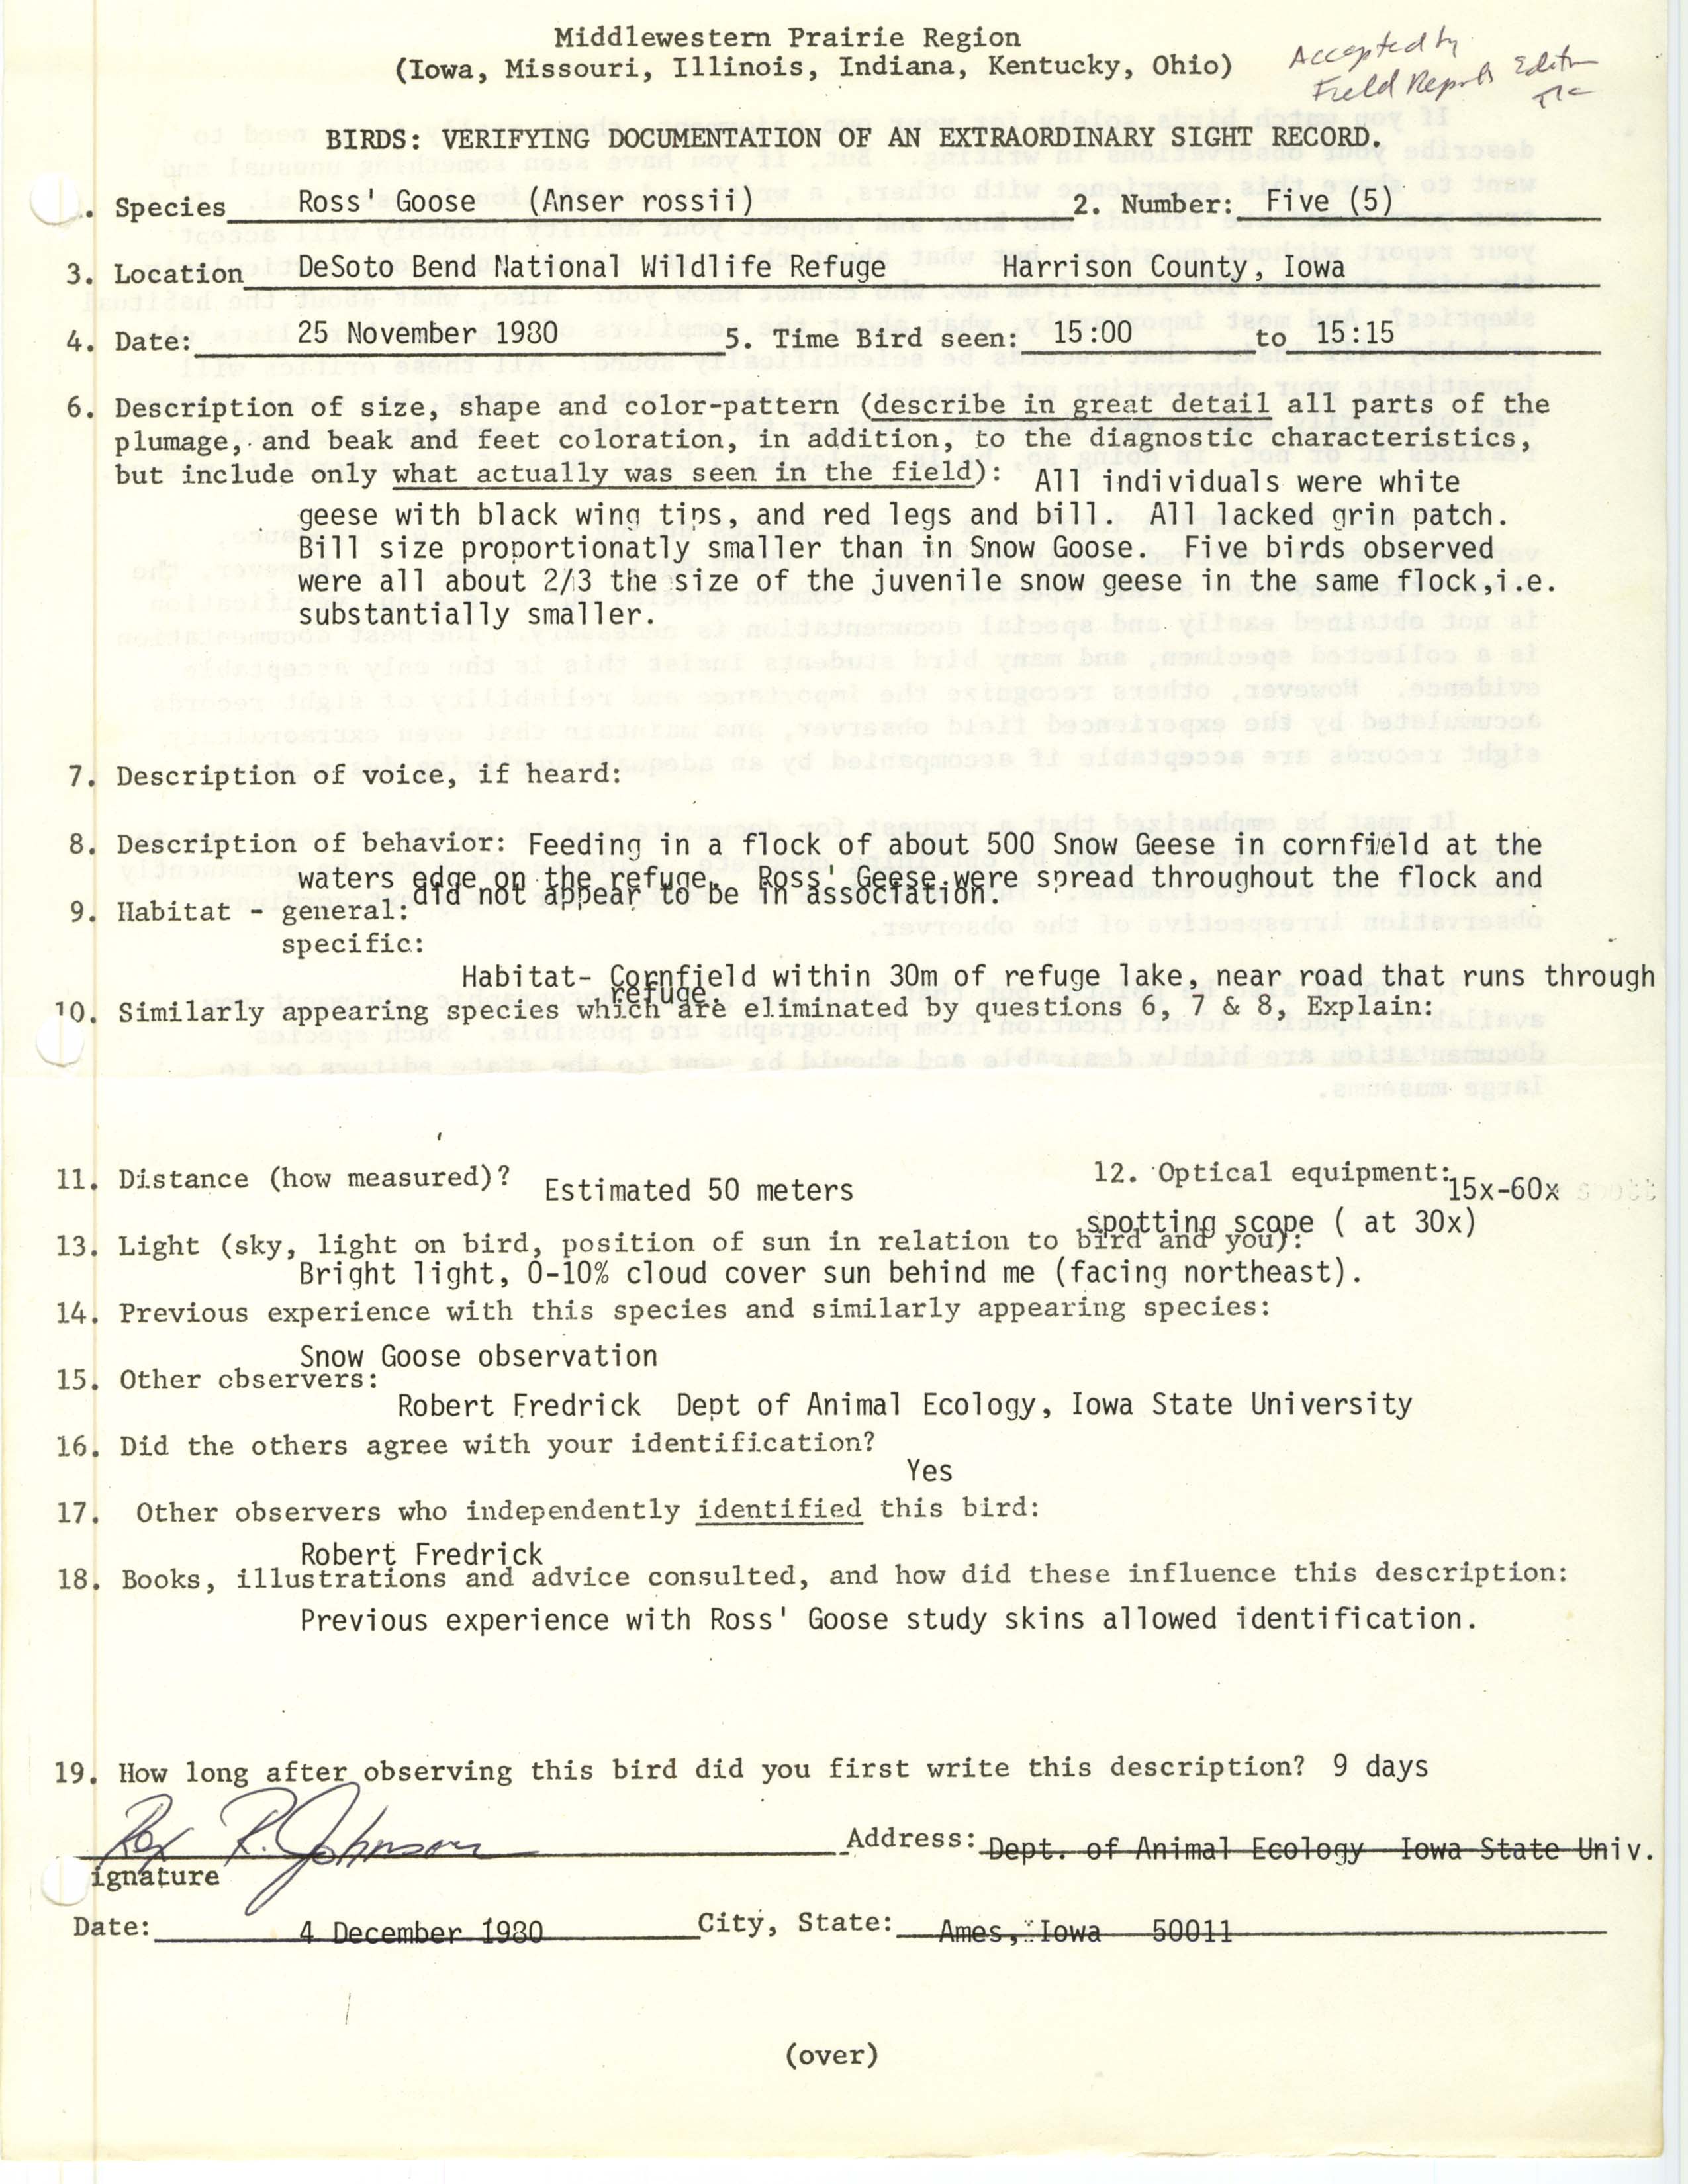 Rare bird documentation form for Ross' Goose at DeSoto Bend National Wildlife Refuge, 1980